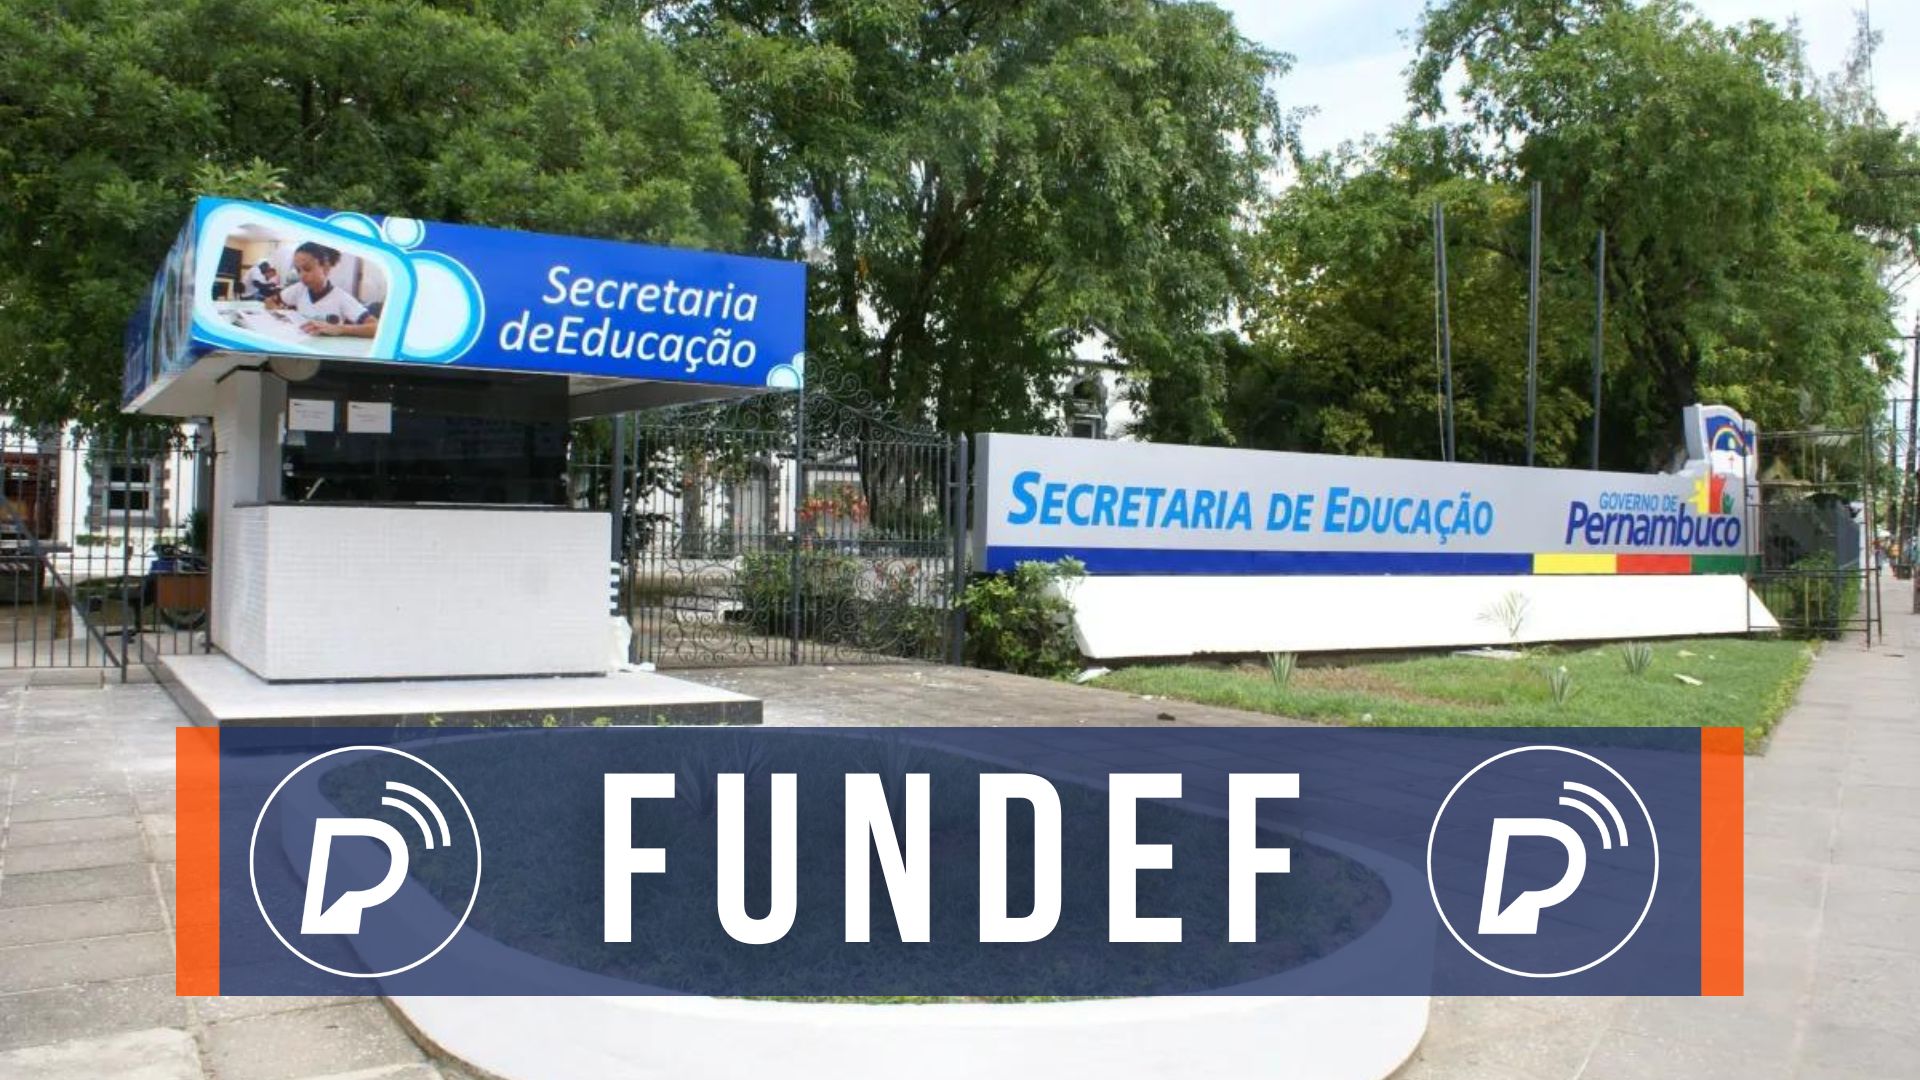 FUNDEF governo de Pernambuco disponibiliza portal para consulta; veja como acessar